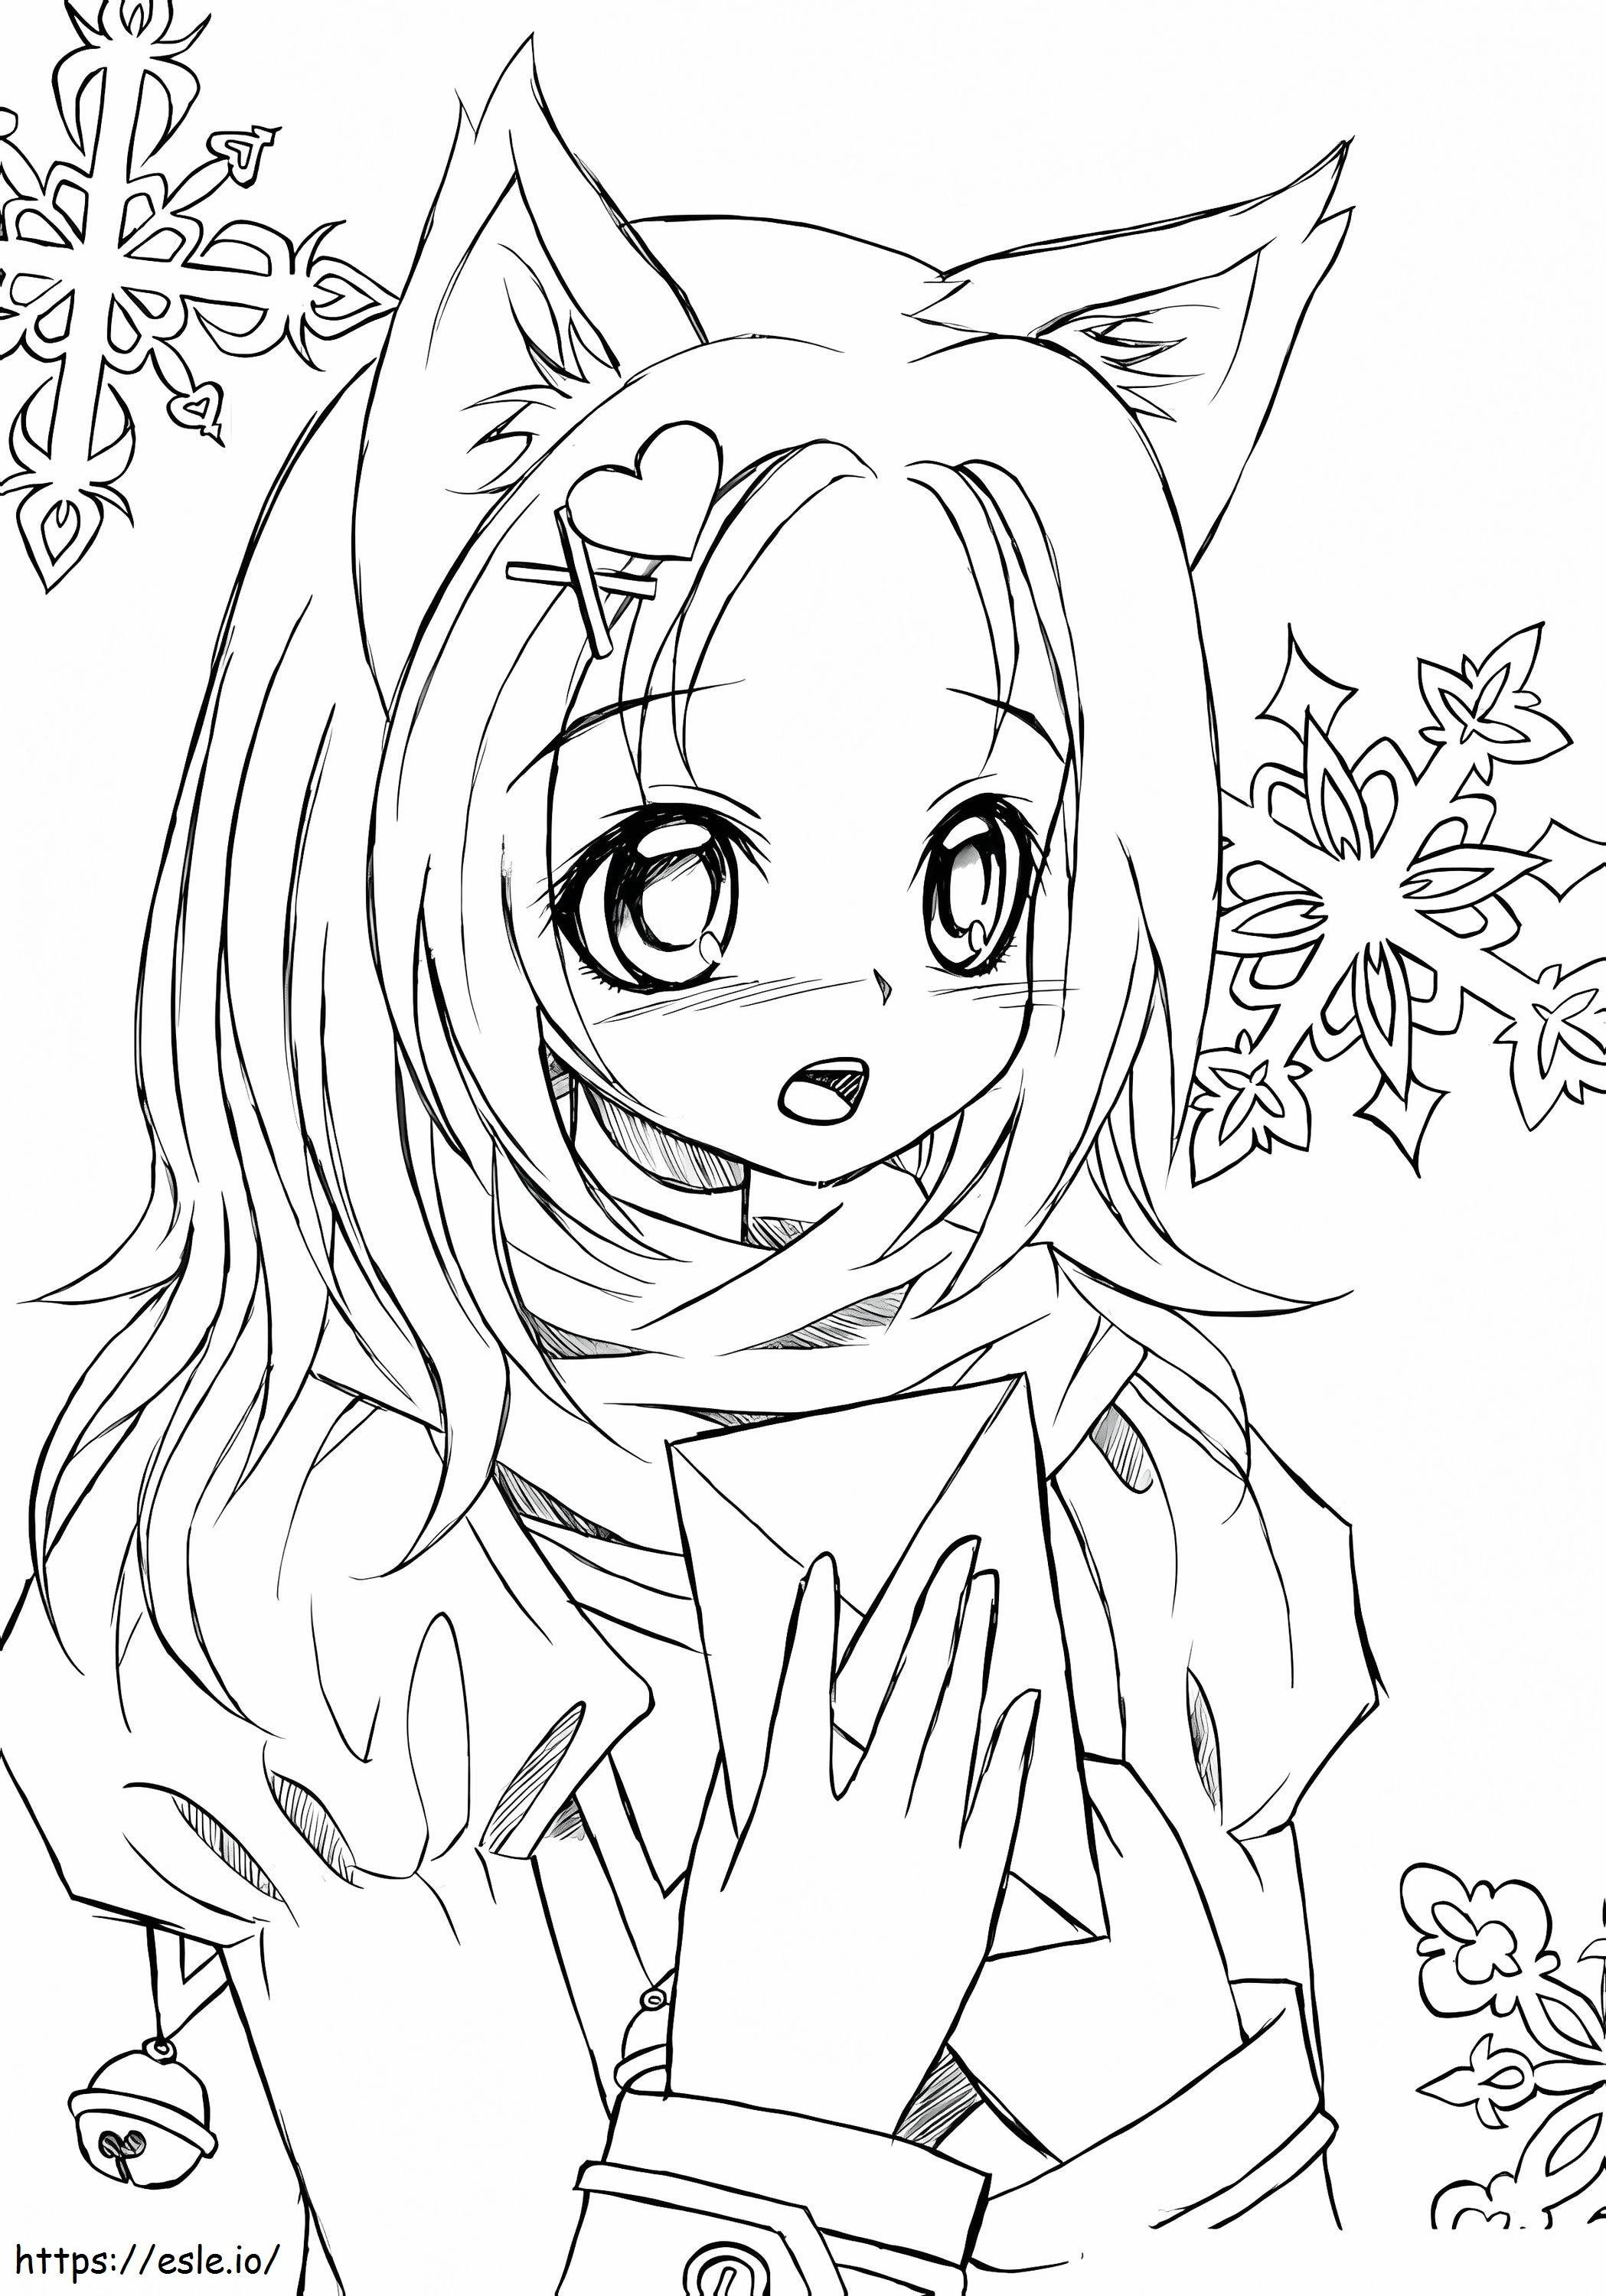 Kawaii Wolf Girl coloring page